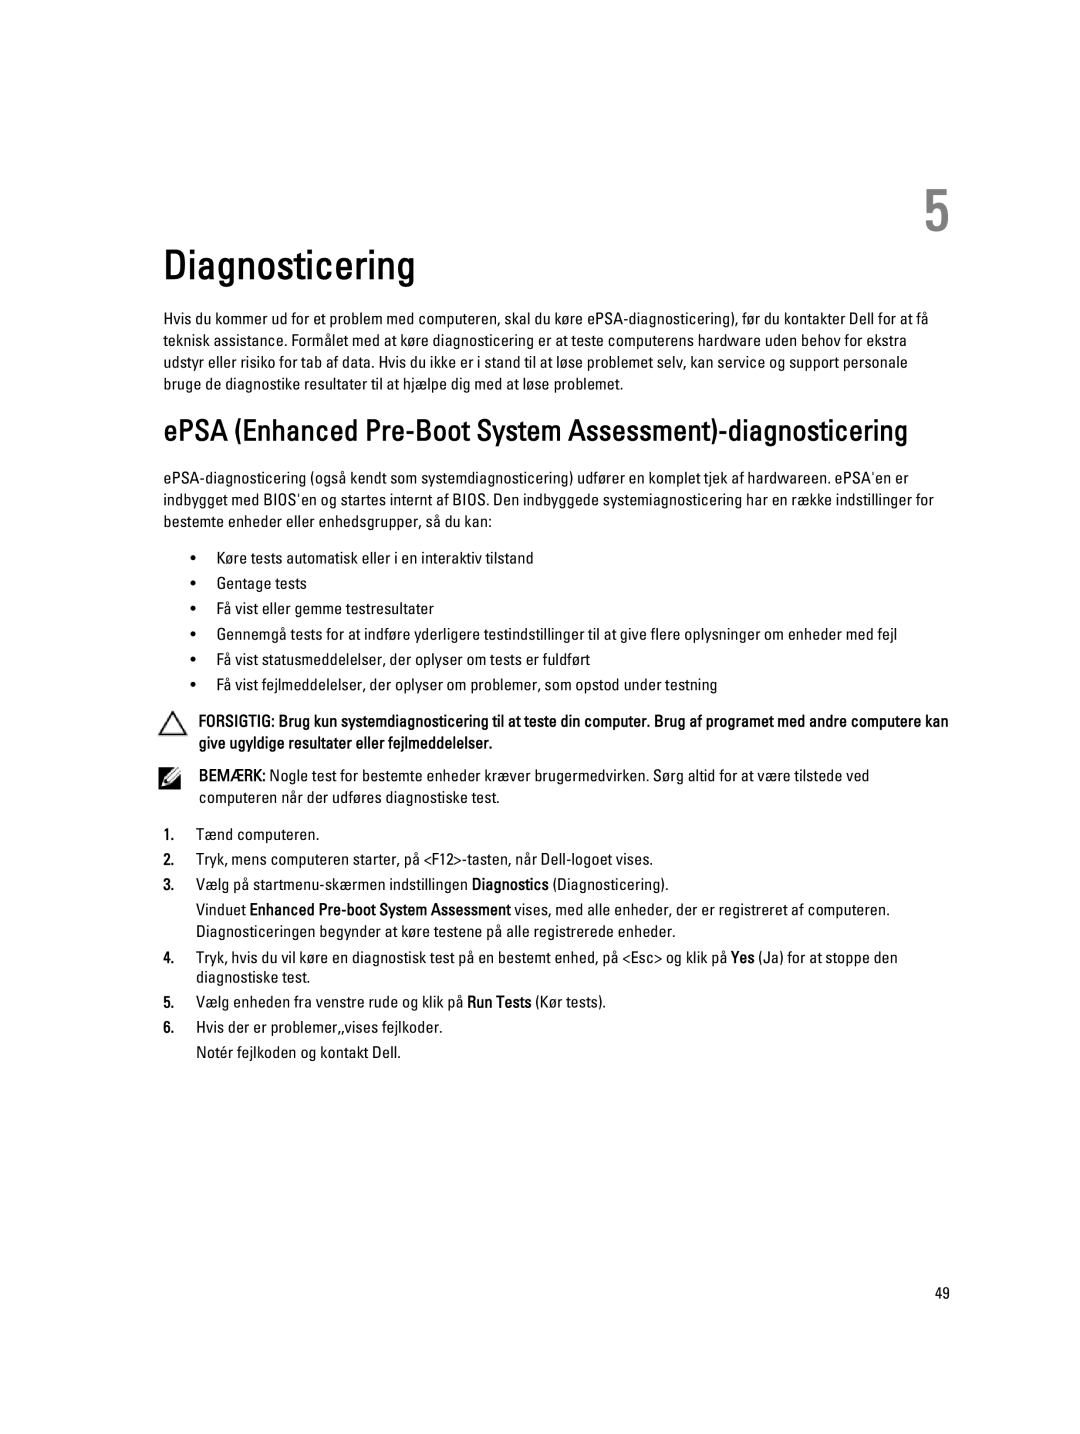 Dell T3610 manual Diagnosticering, EPSA Enhanced Pre-Boot System Assessment-diagnosticering 